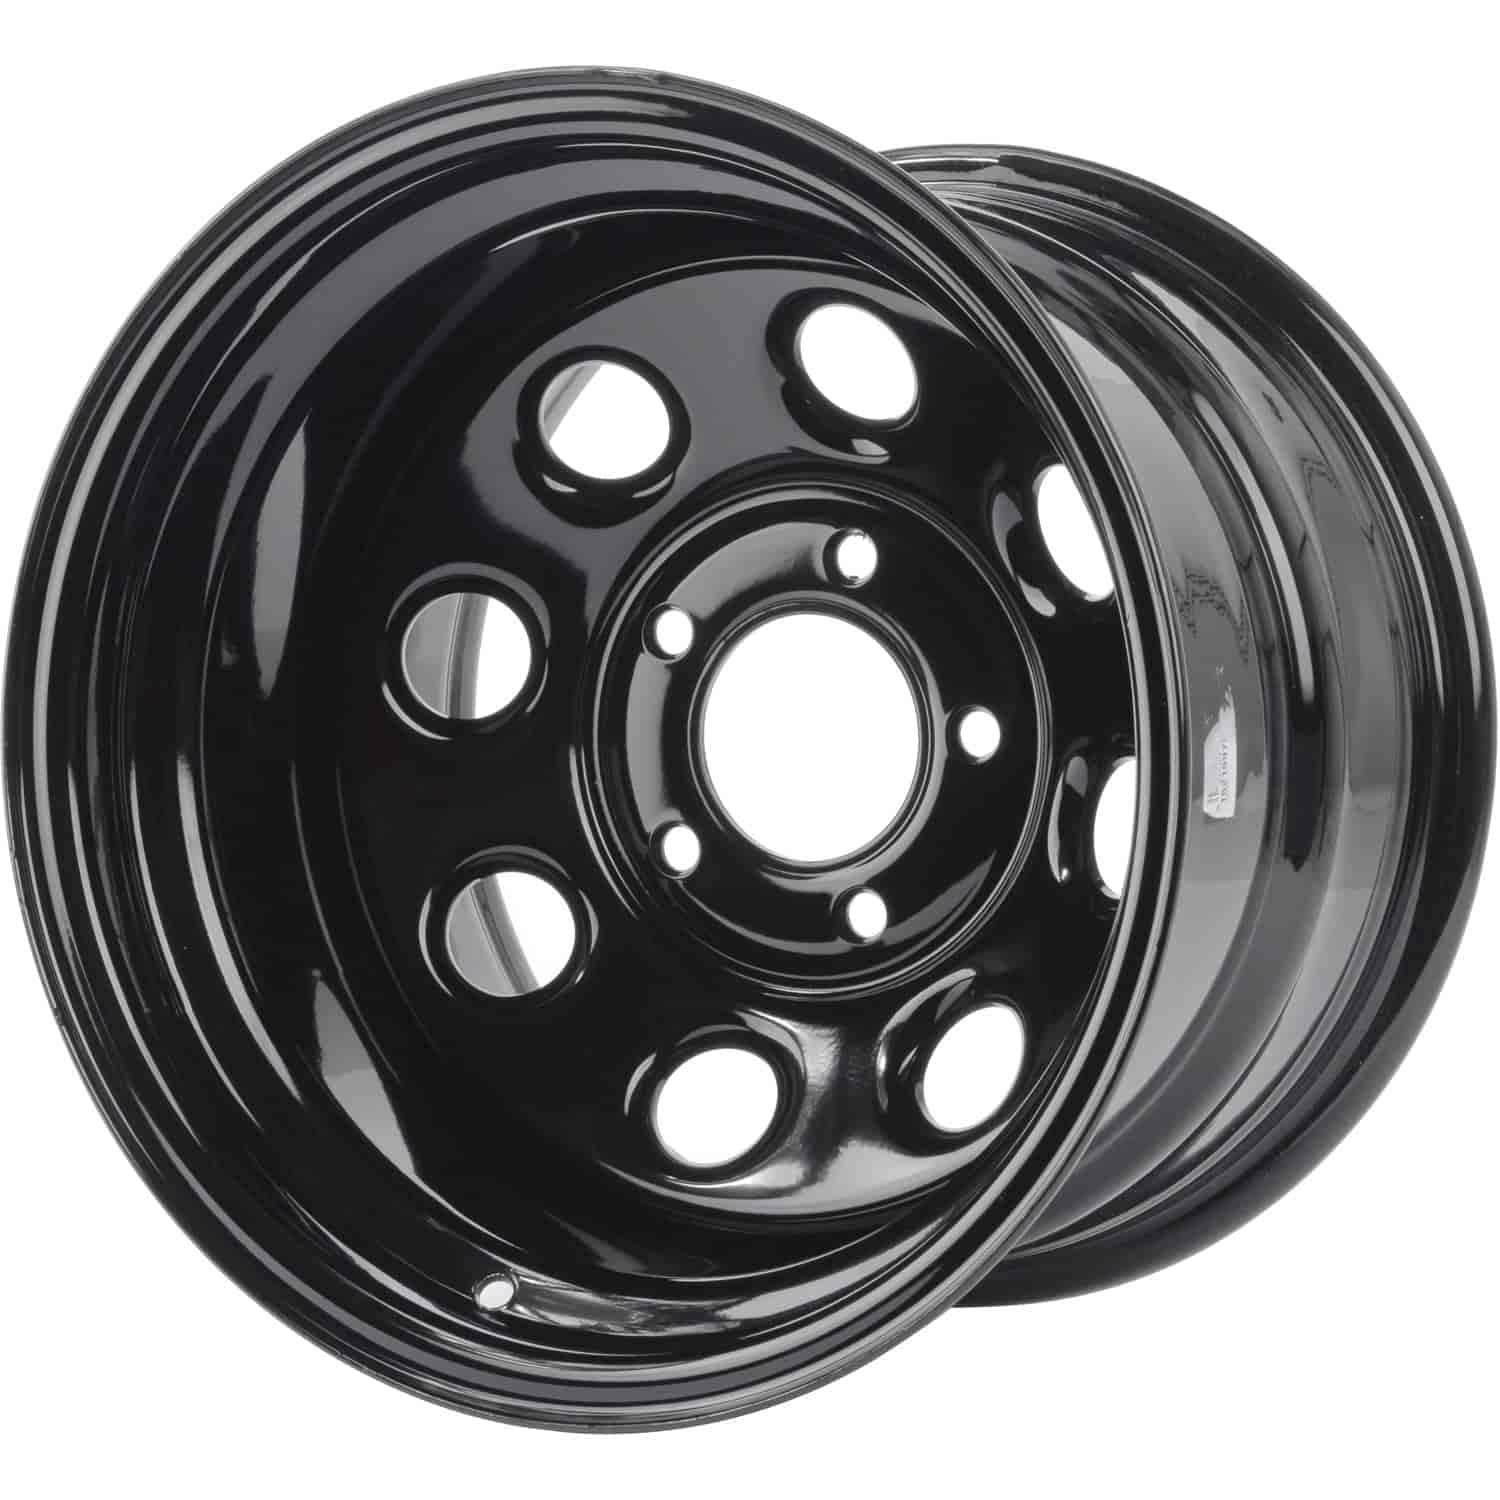 Baja-8 Steel Wheel [Size: 15 x 10"] Black